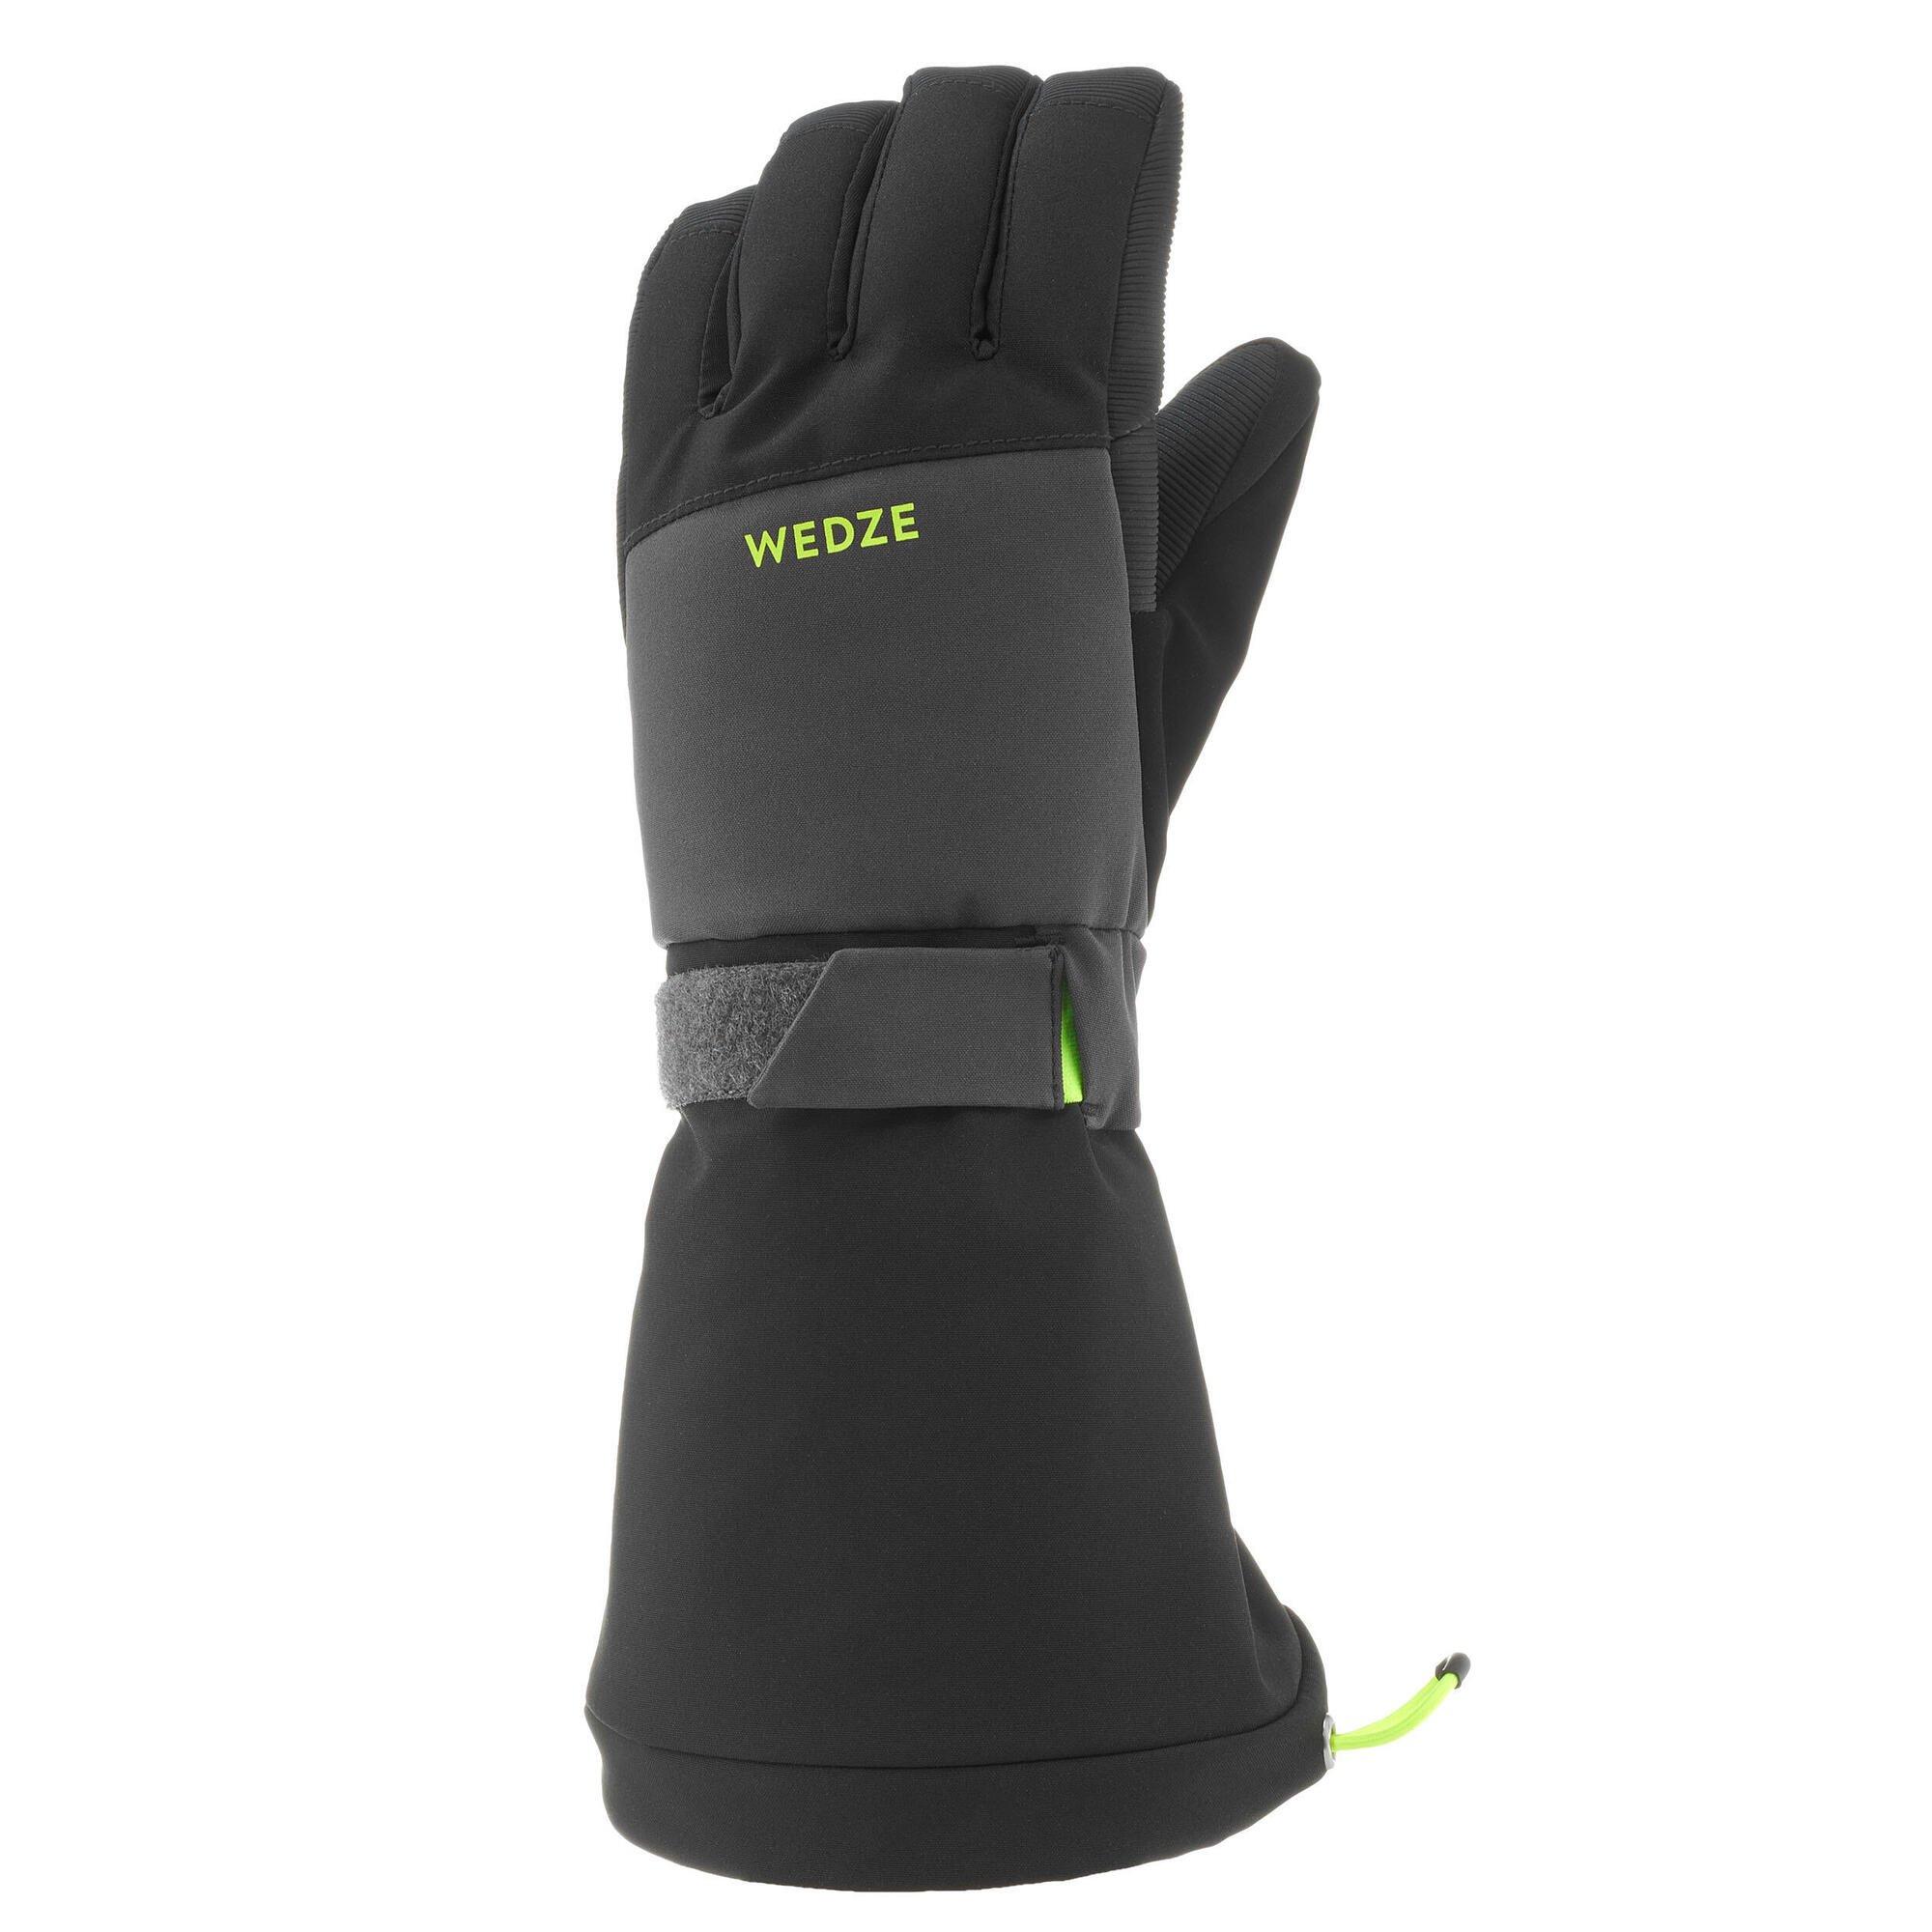 Decathlon Warm And Waterproof Ski Gloves